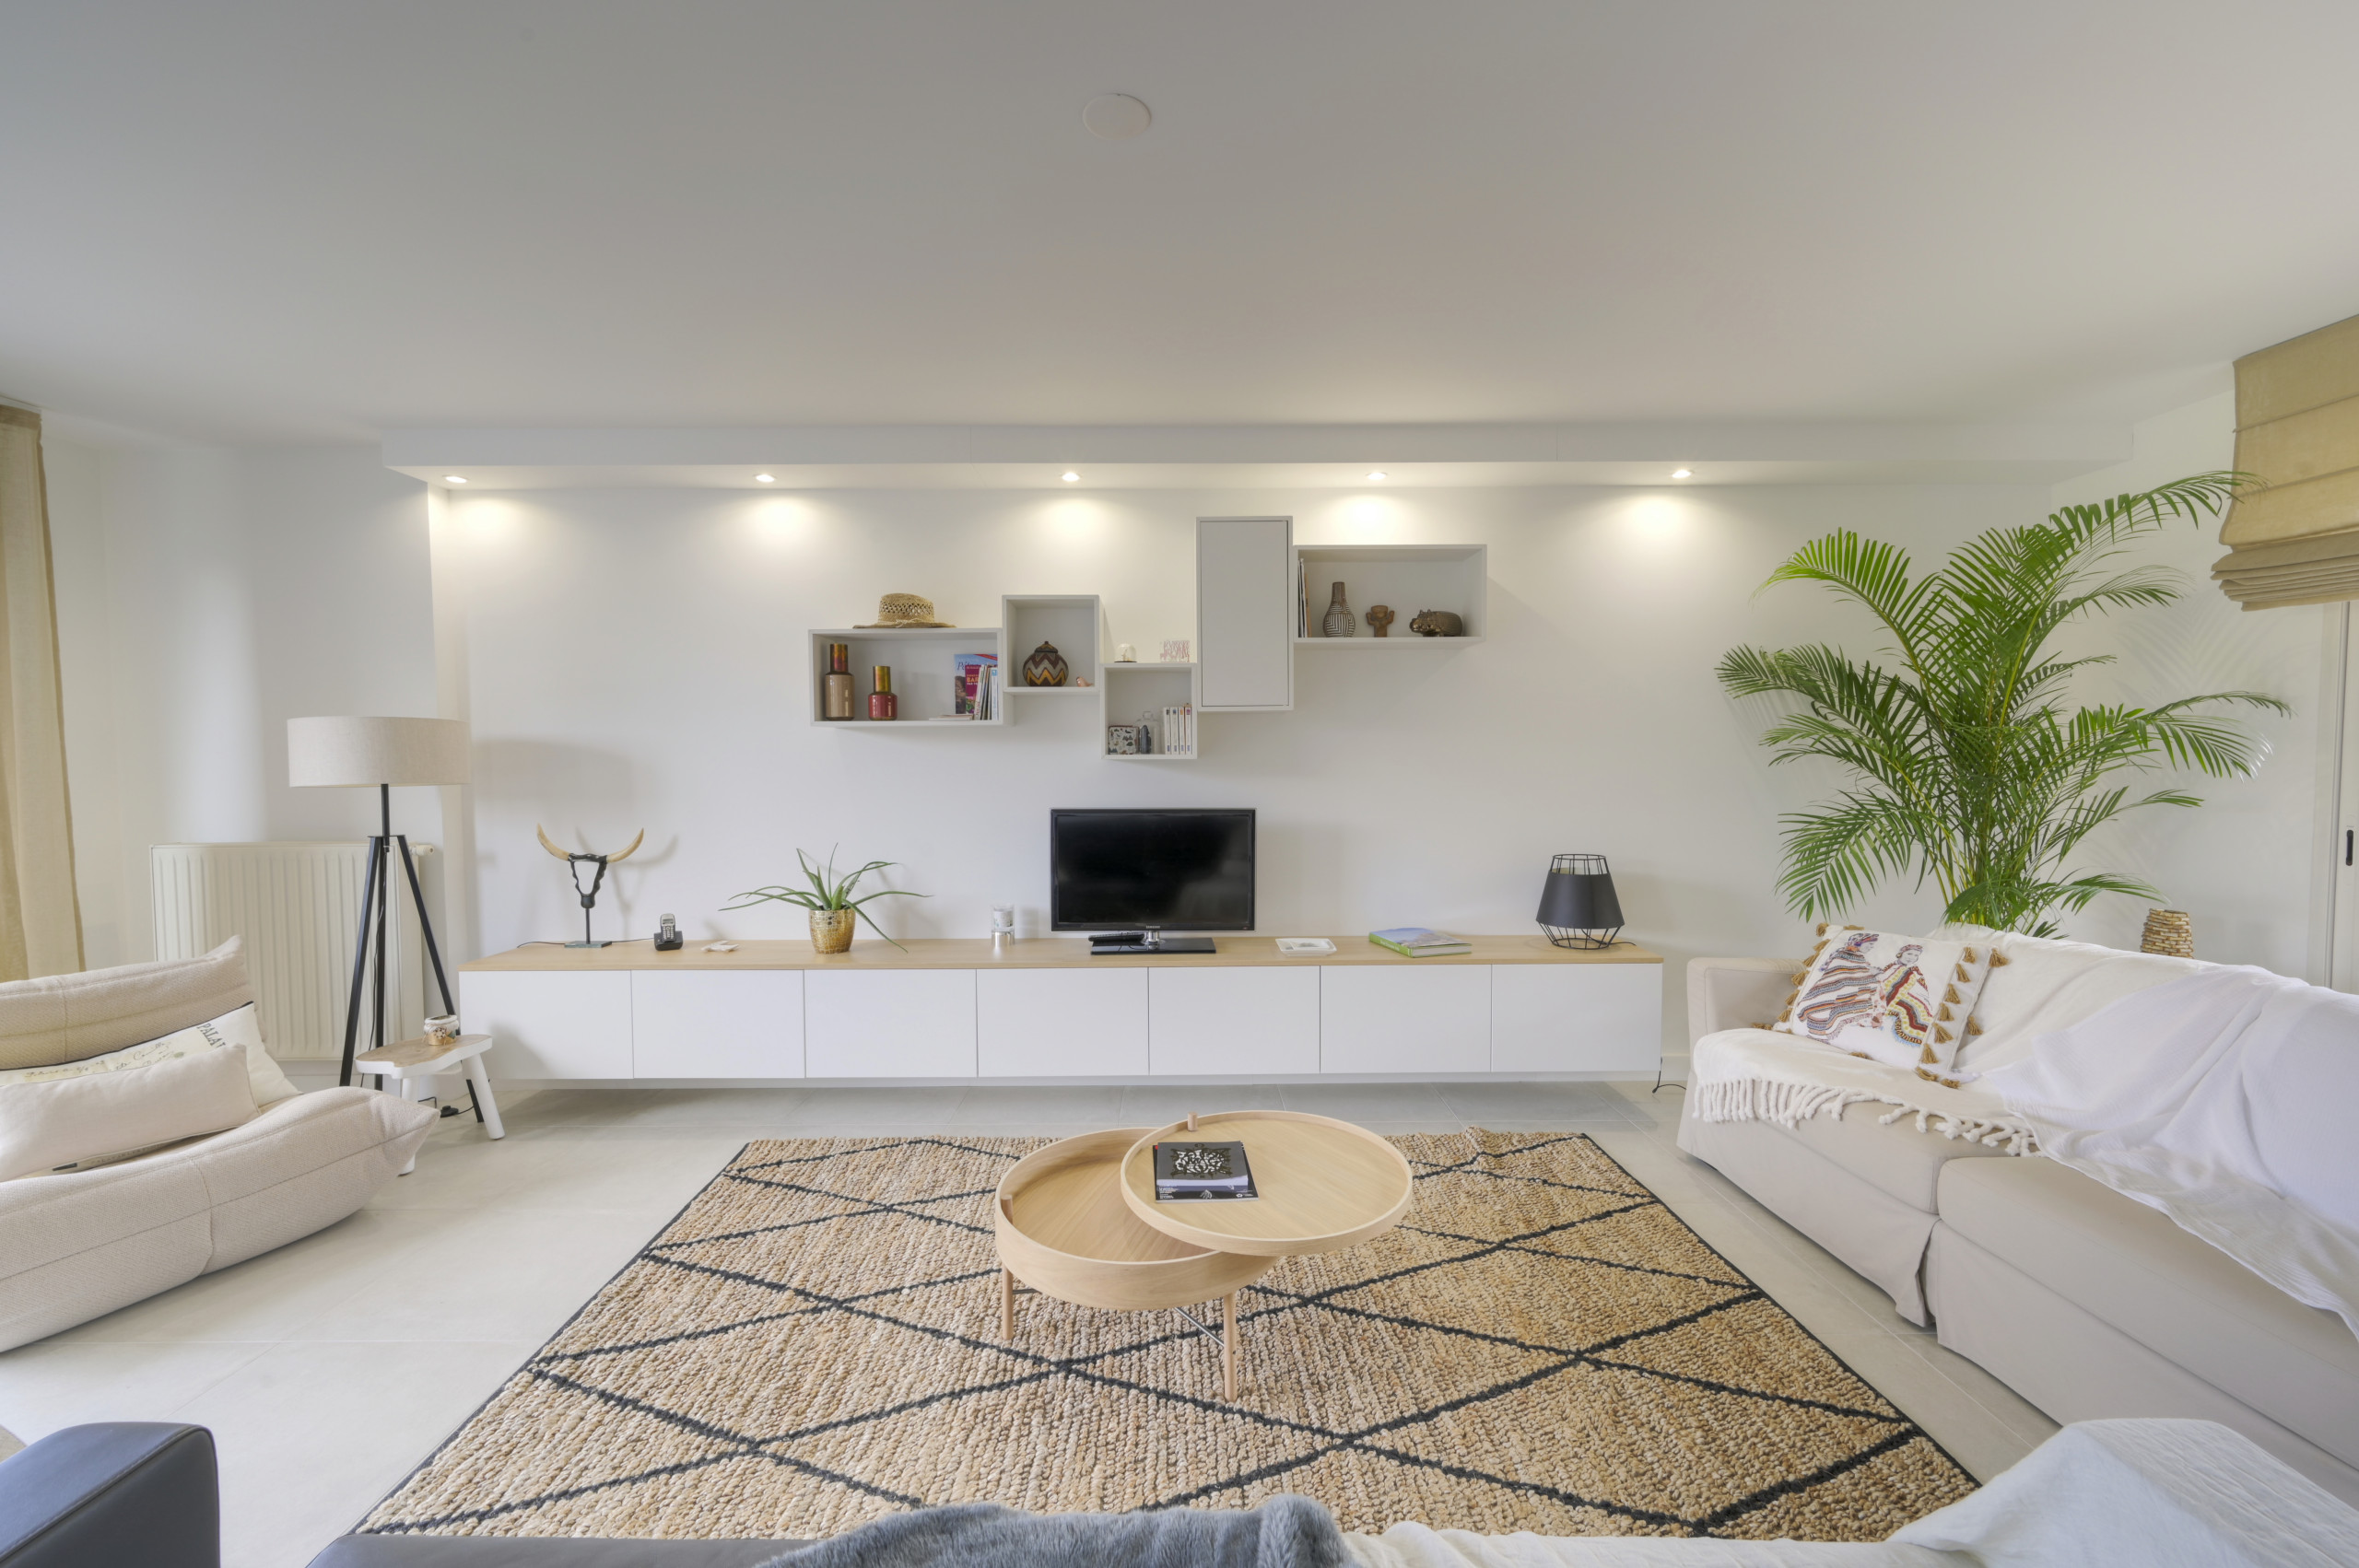 75 Beautiful Ceramic Tile Living Room Pictures Ideas December